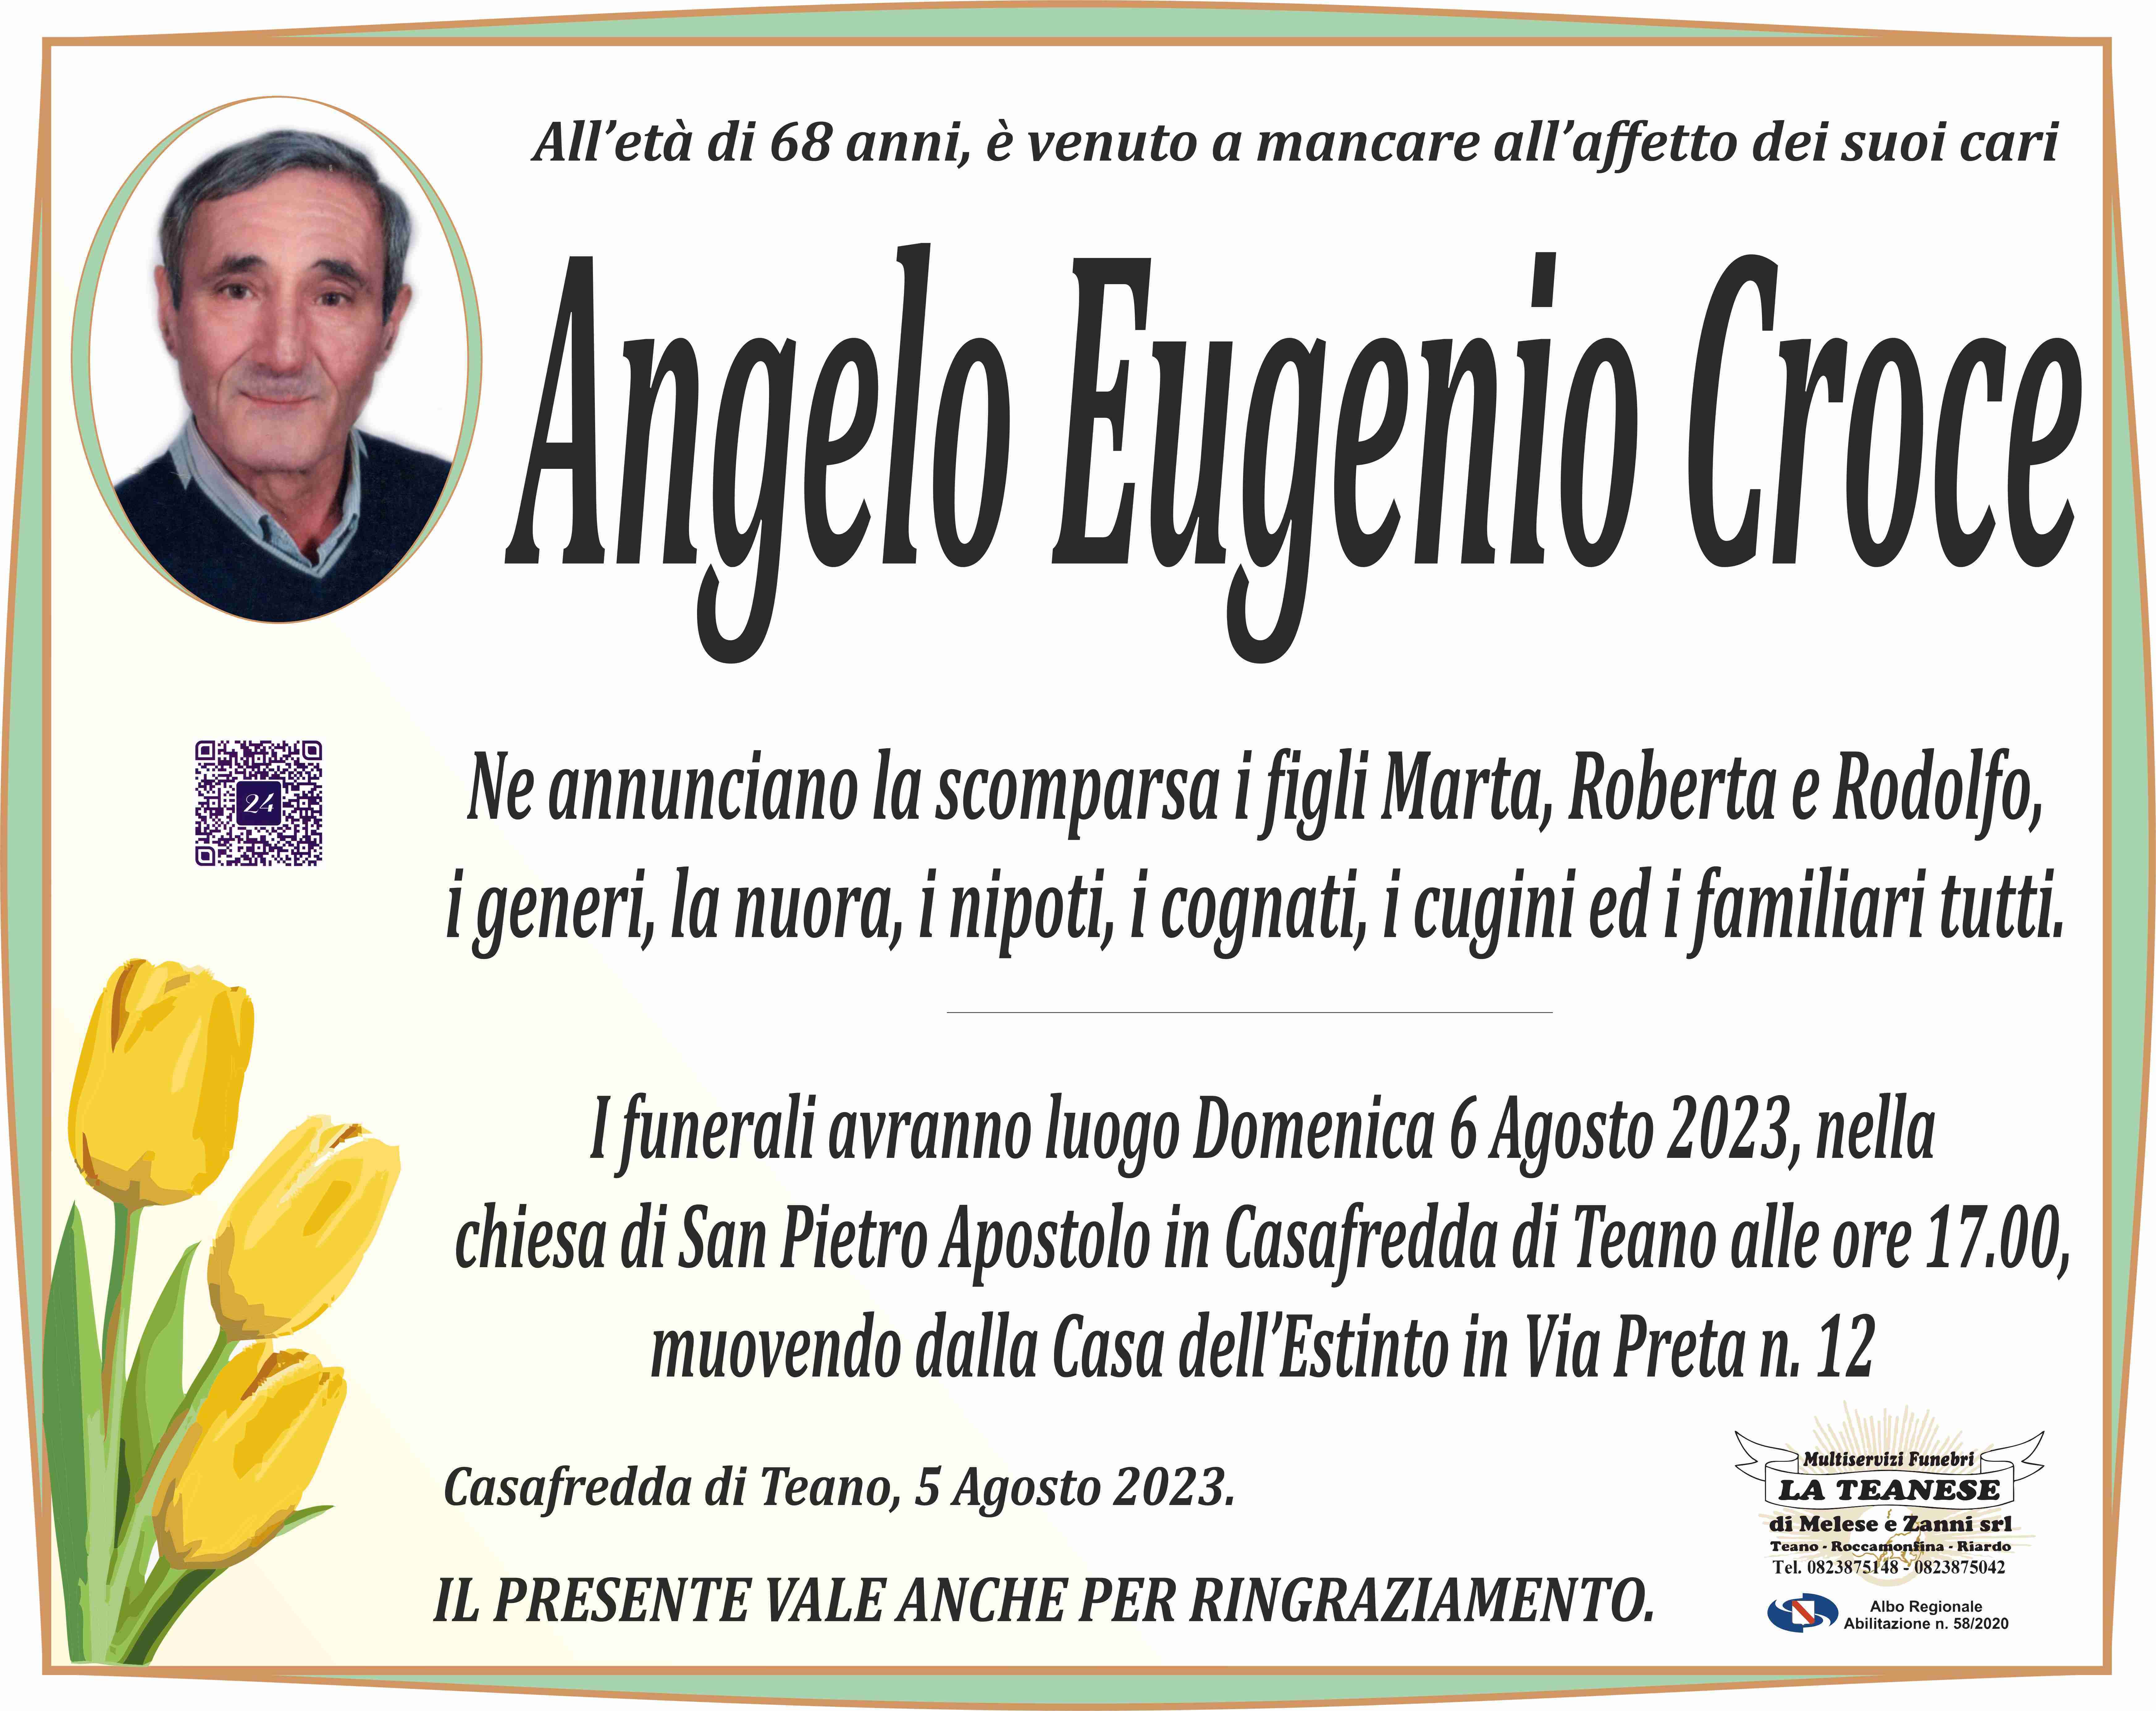 Angelo Eugenio Croce